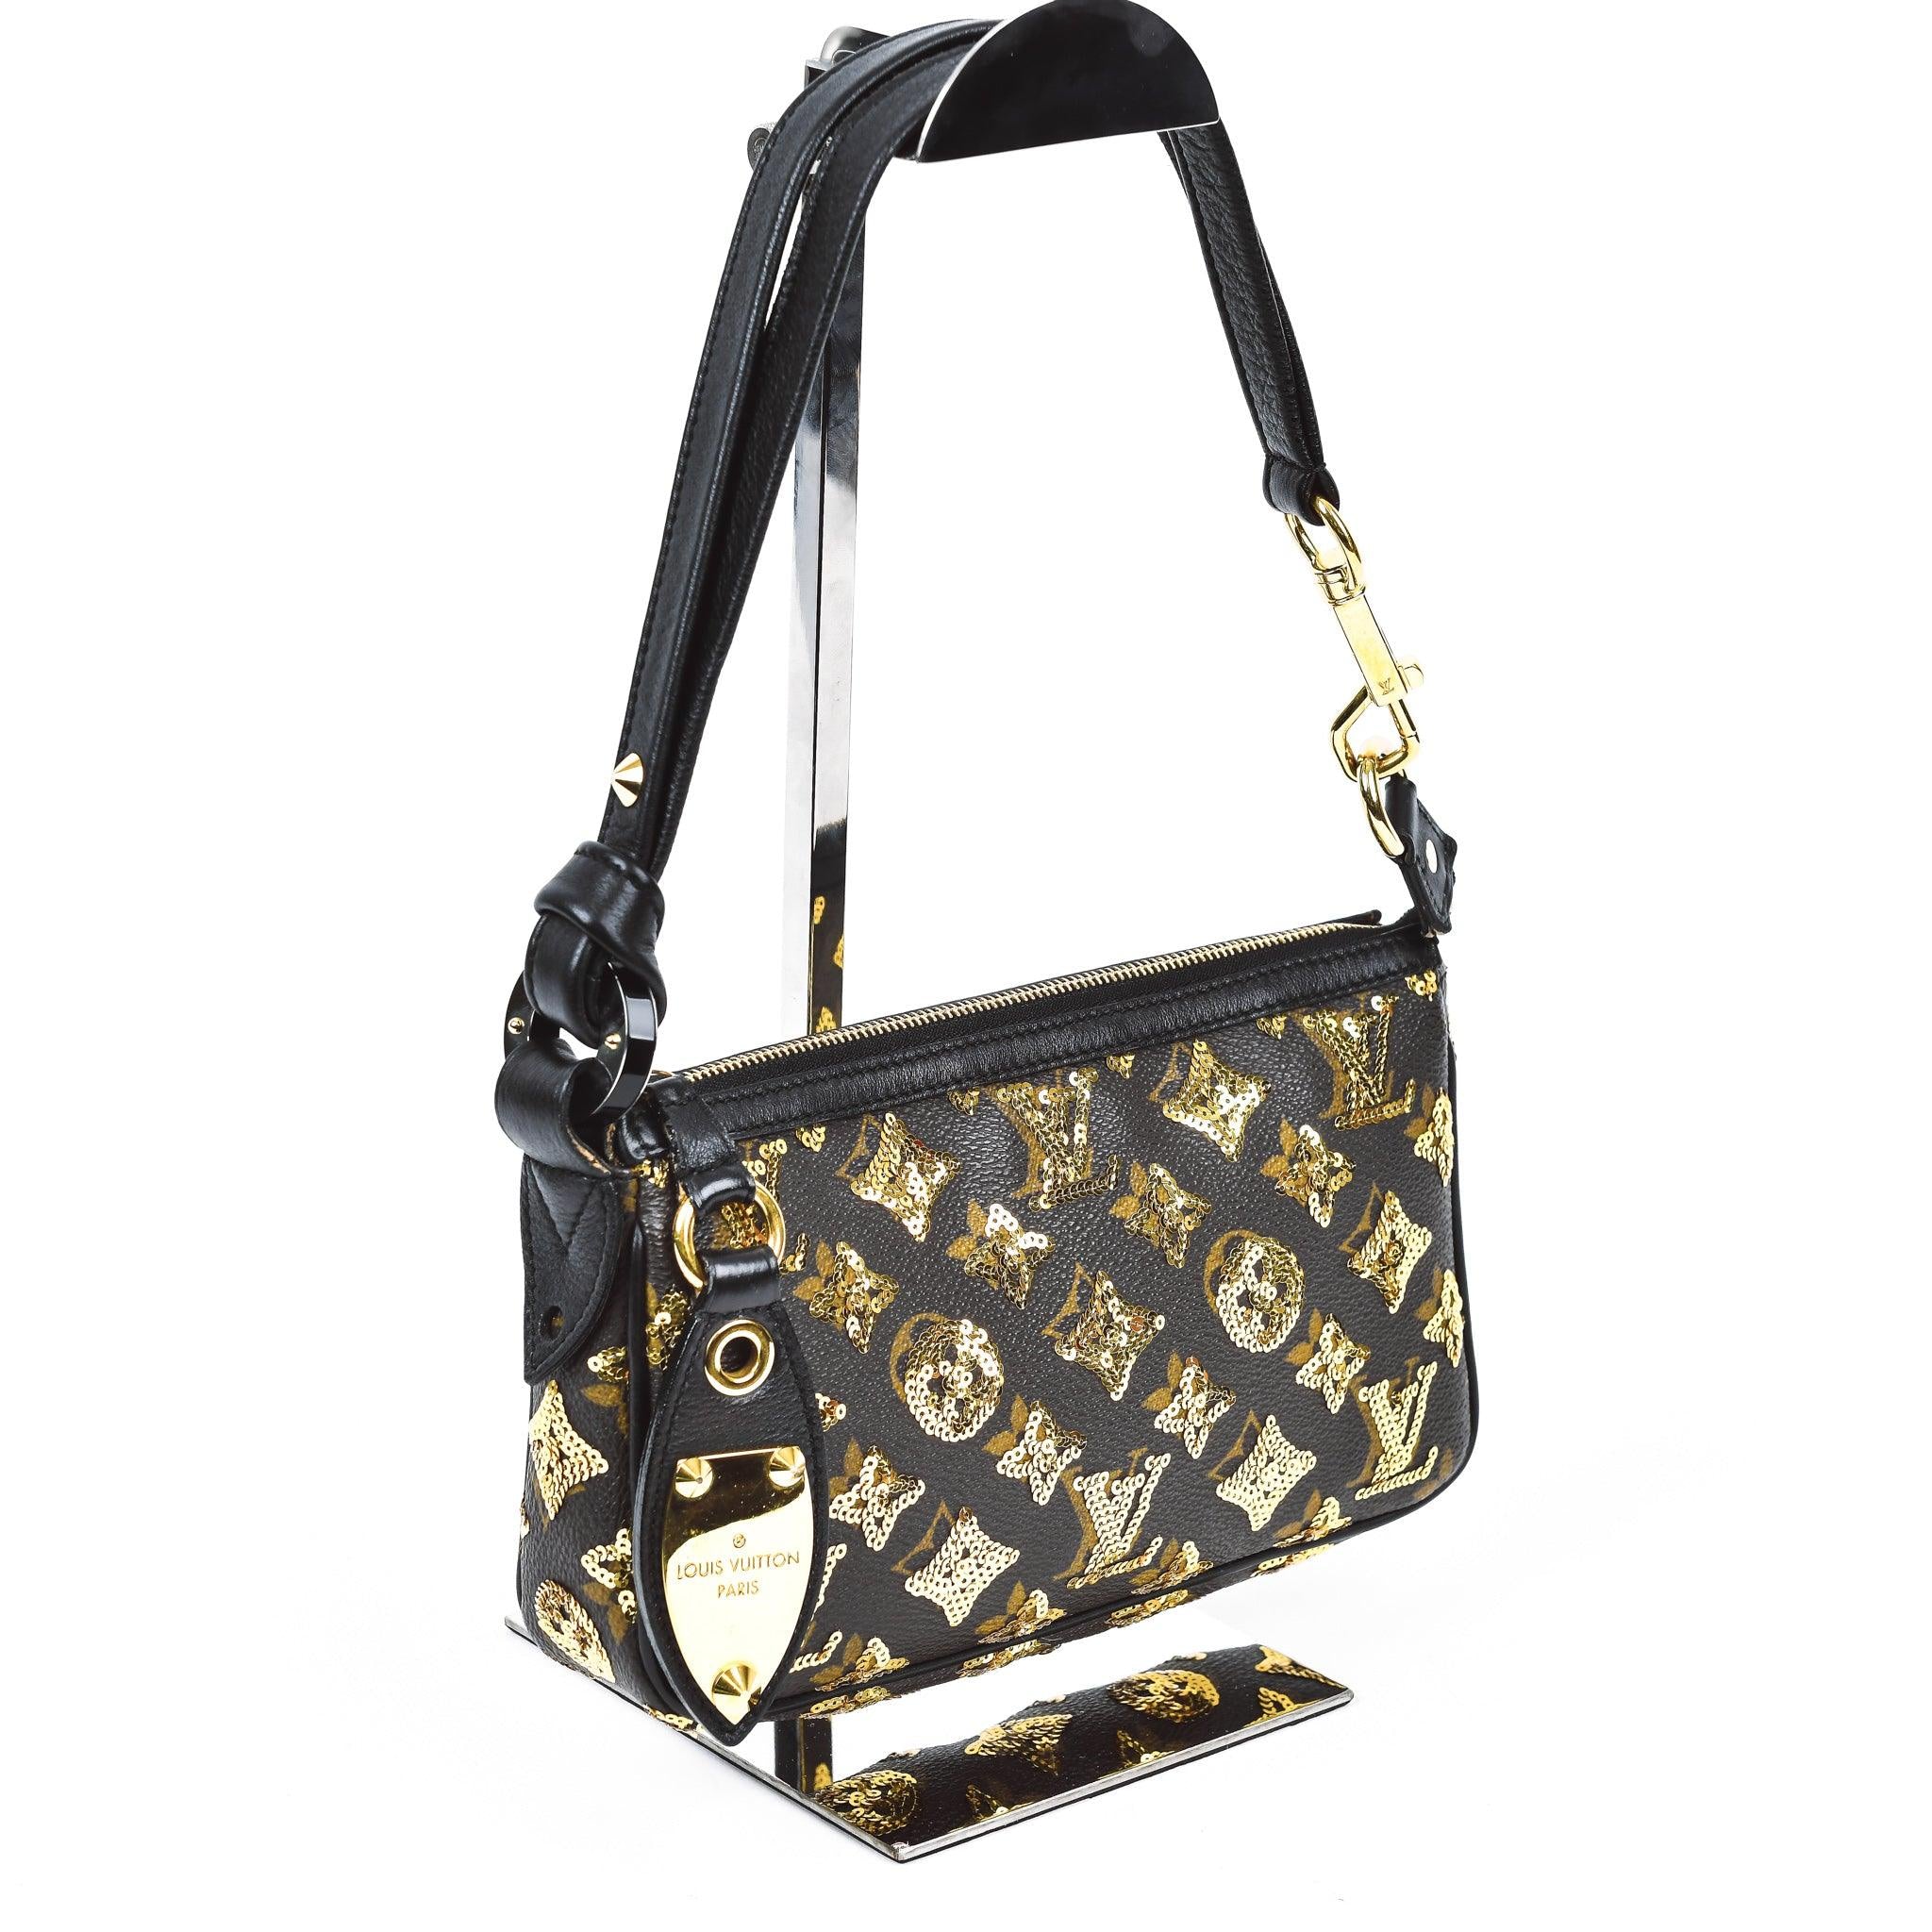 Glitter n gold  Louis vuitton handbags outlet, Bags, Louis